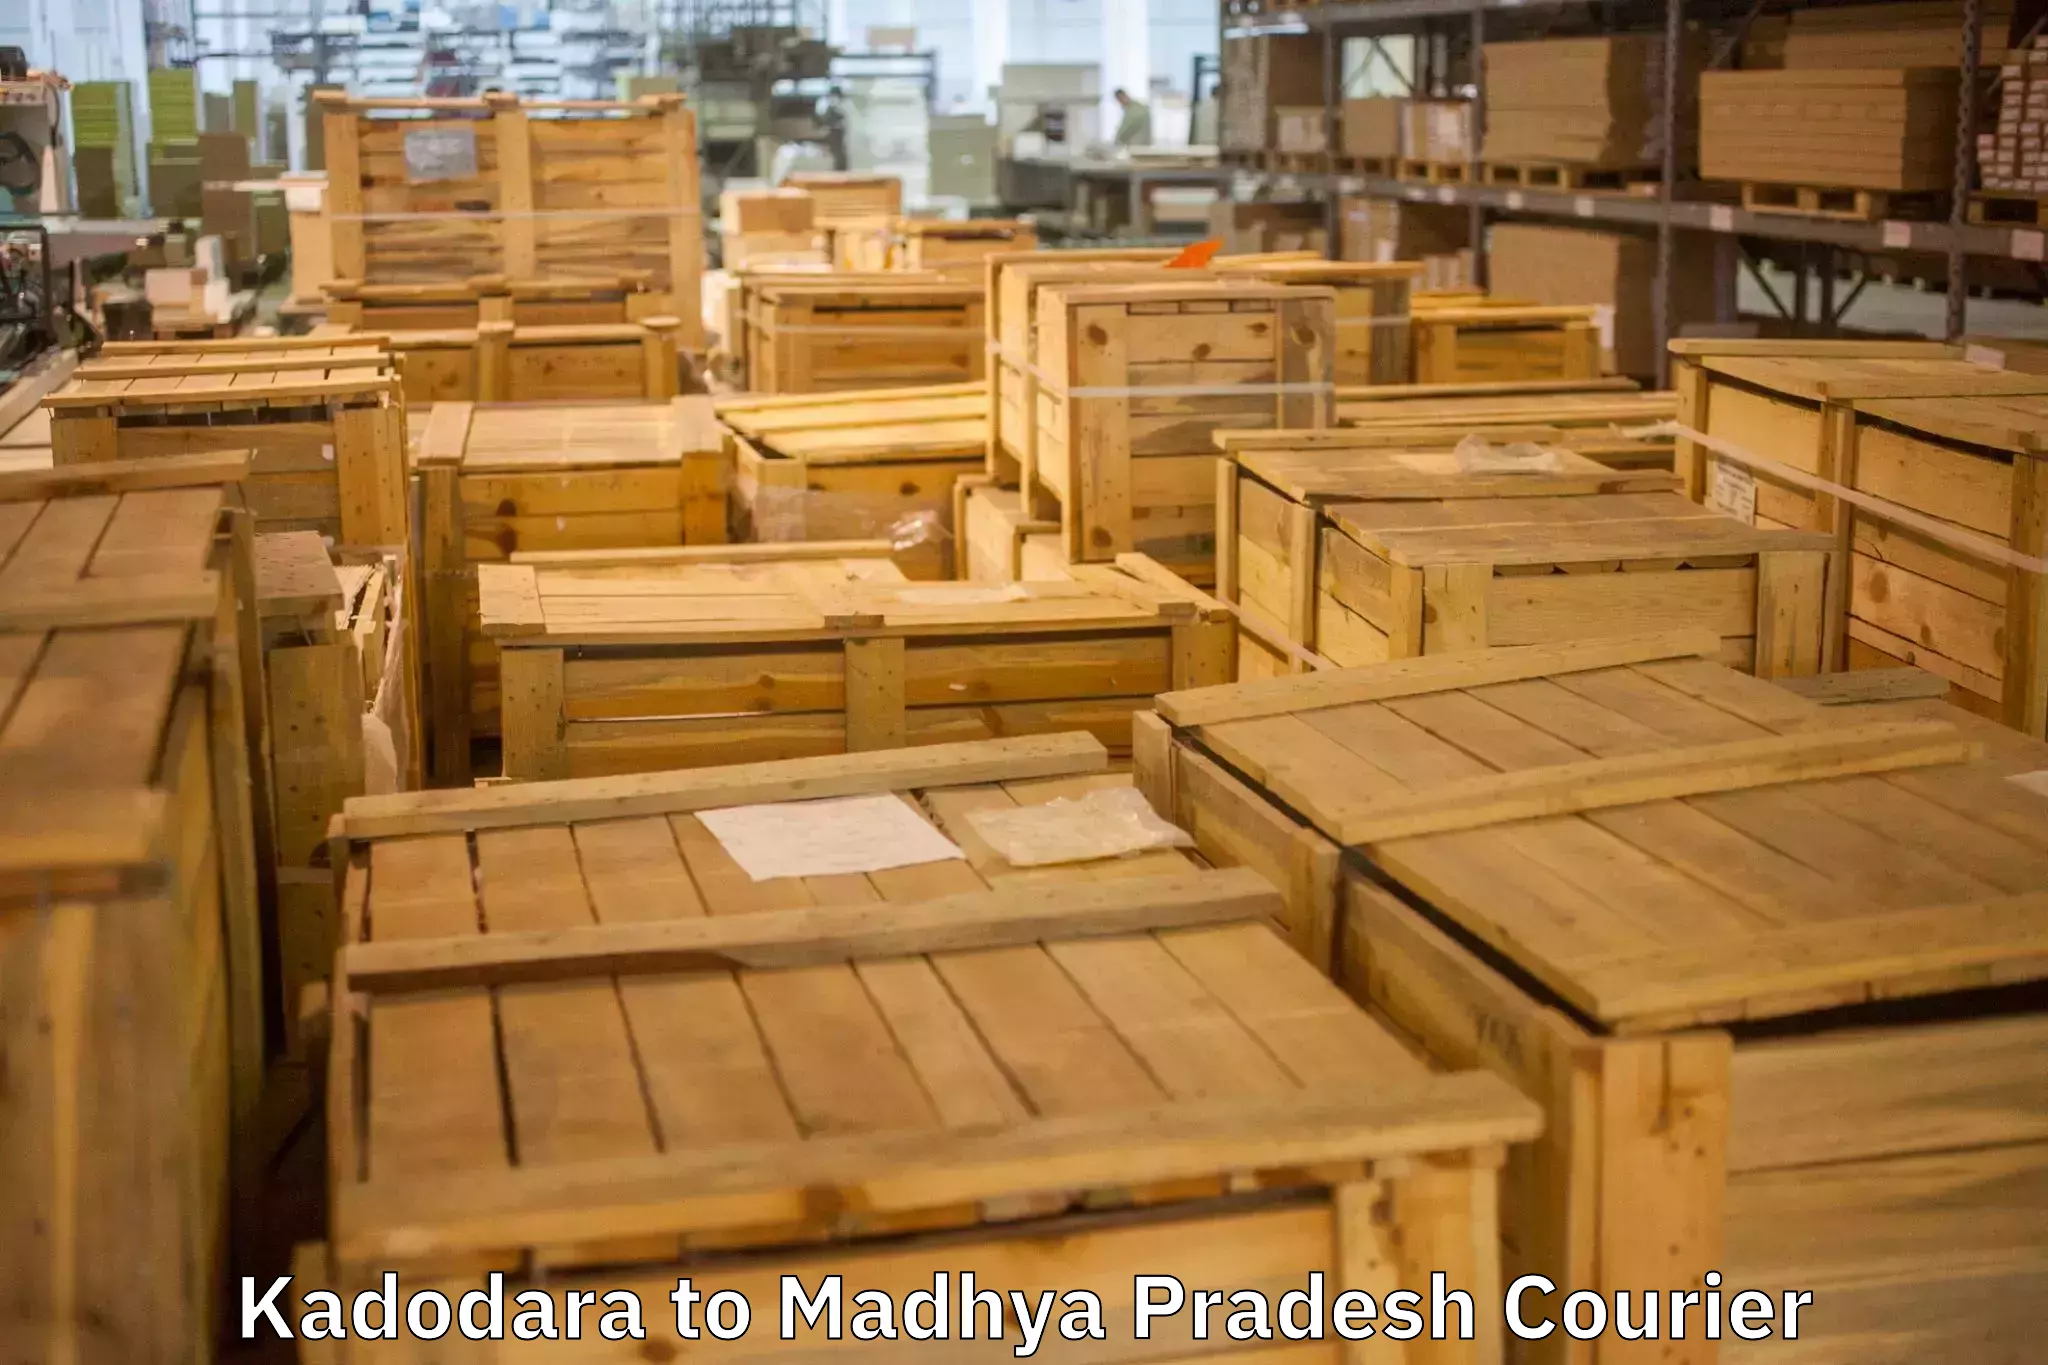 Professional moving company Kadodara to Madhya Pradesh